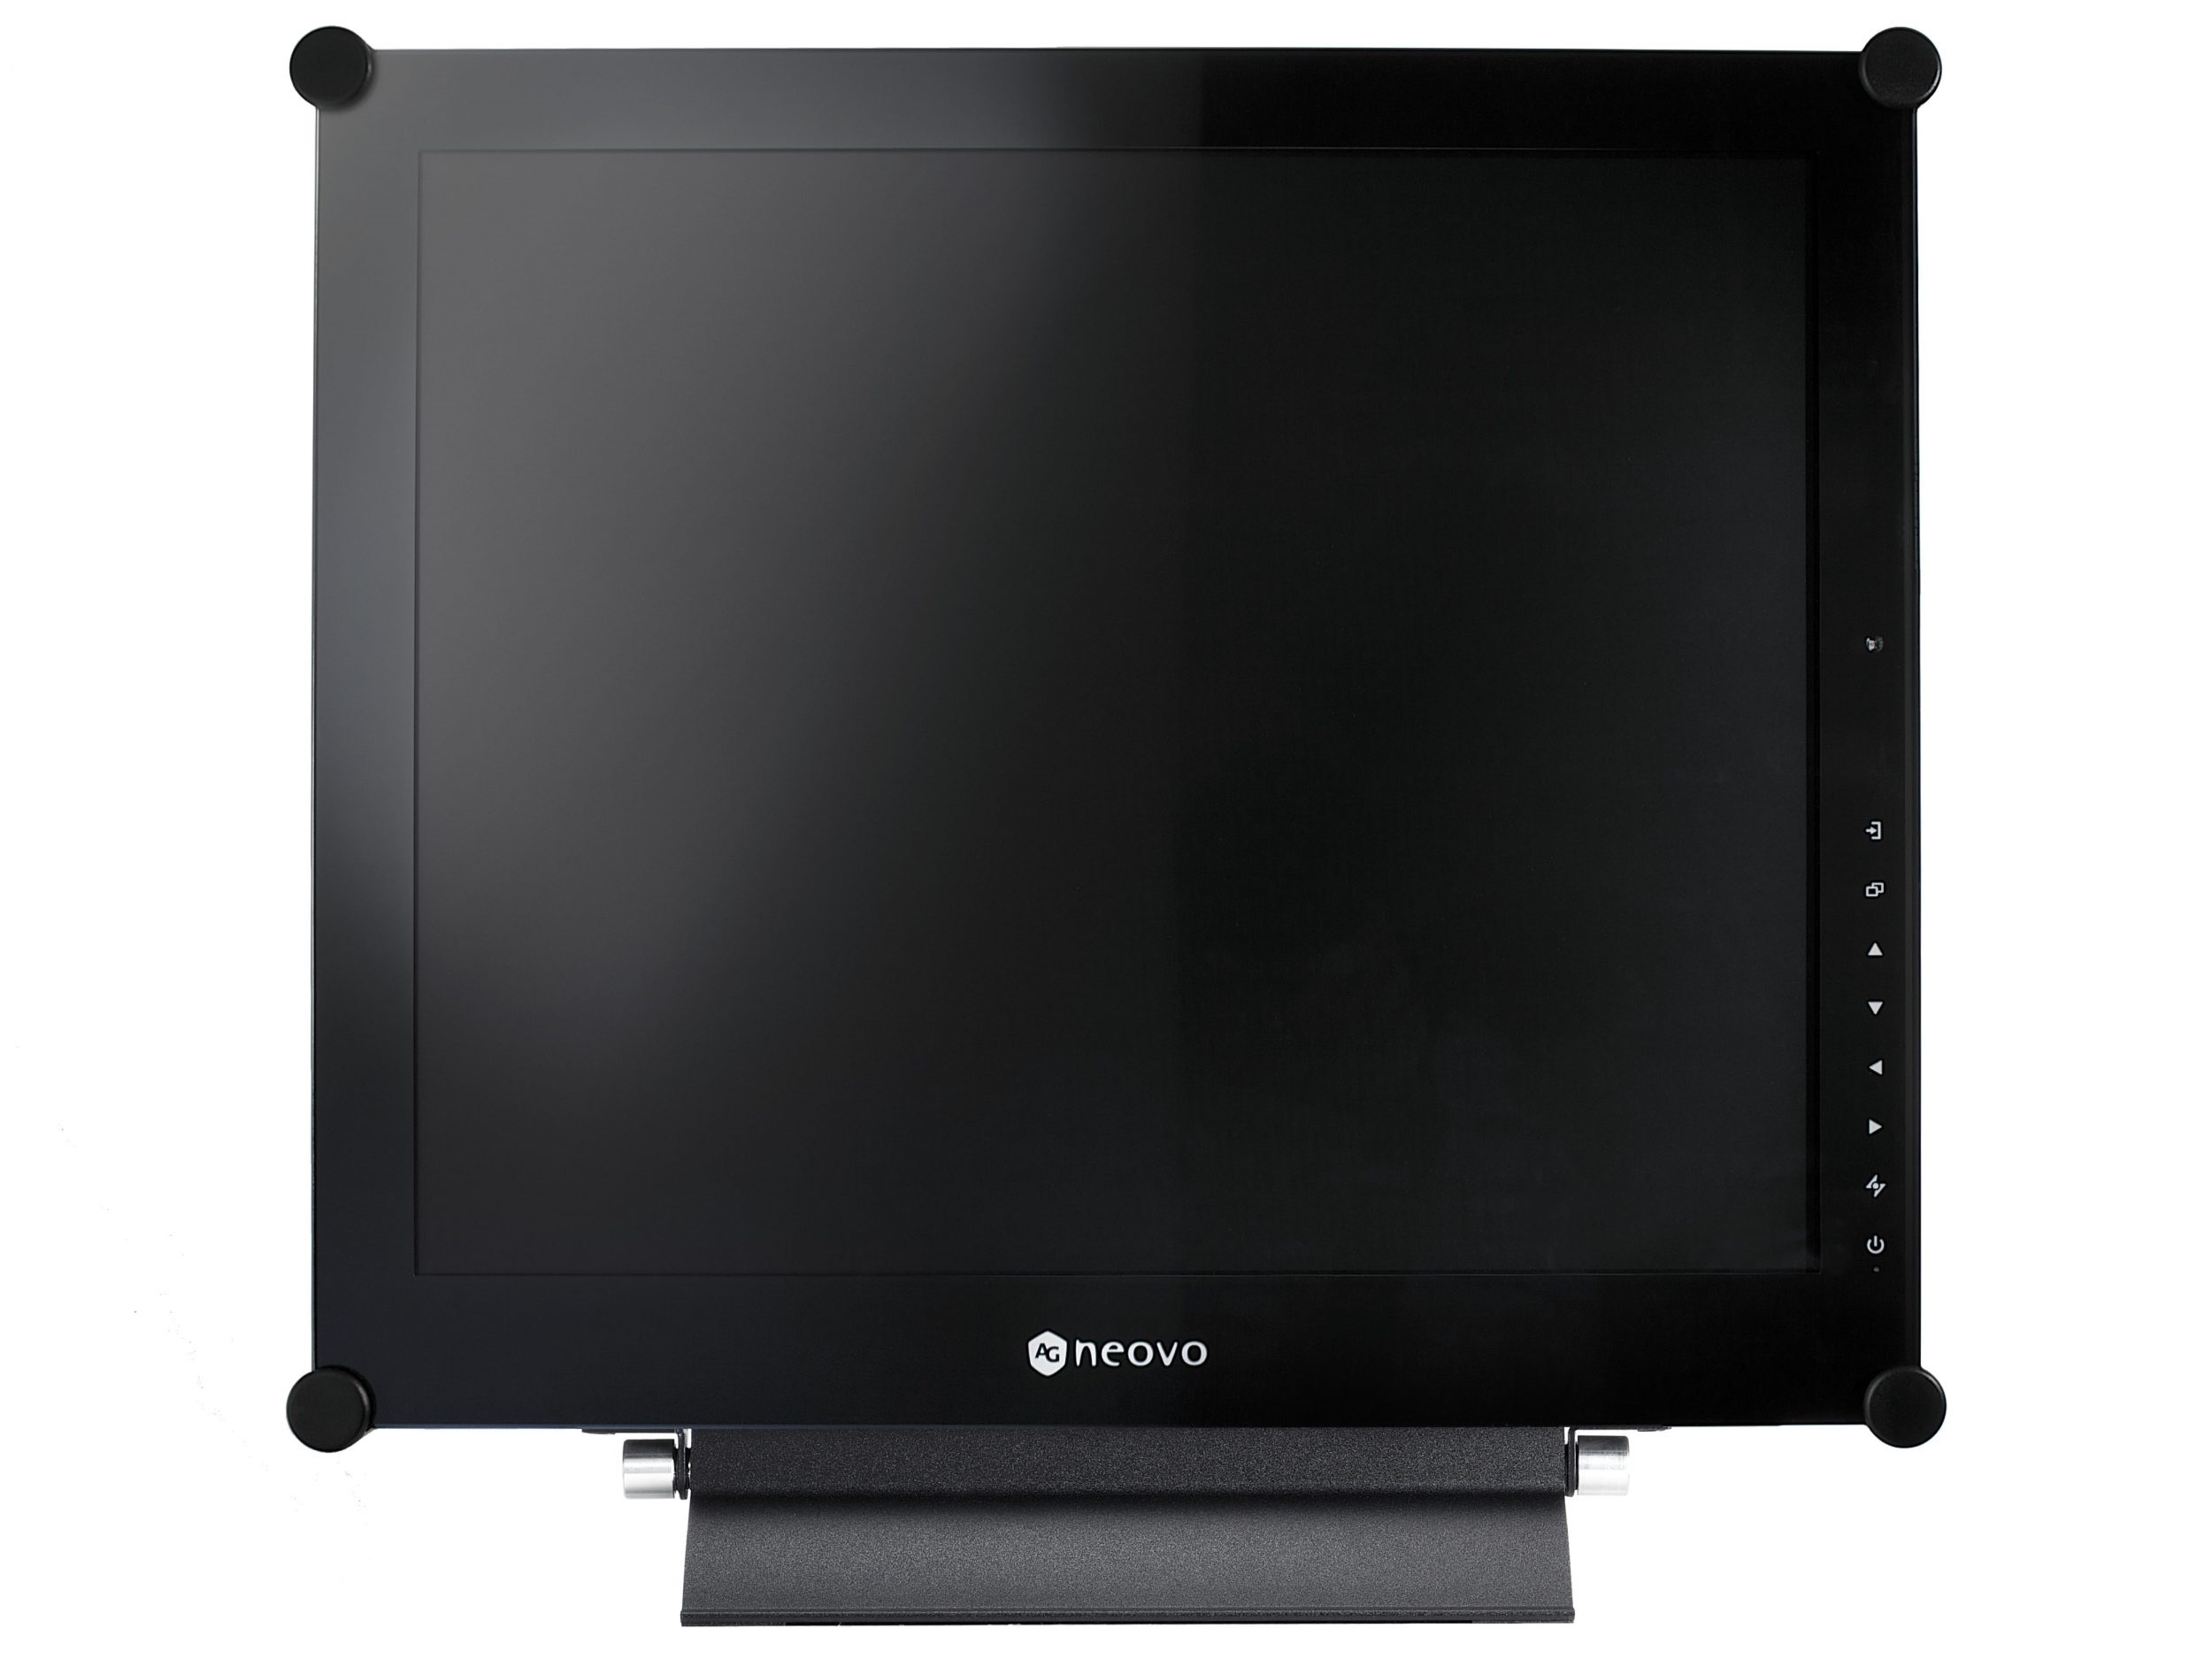 AG Neovo SX-19G 19-inch 5x4 Surveillance Monitor